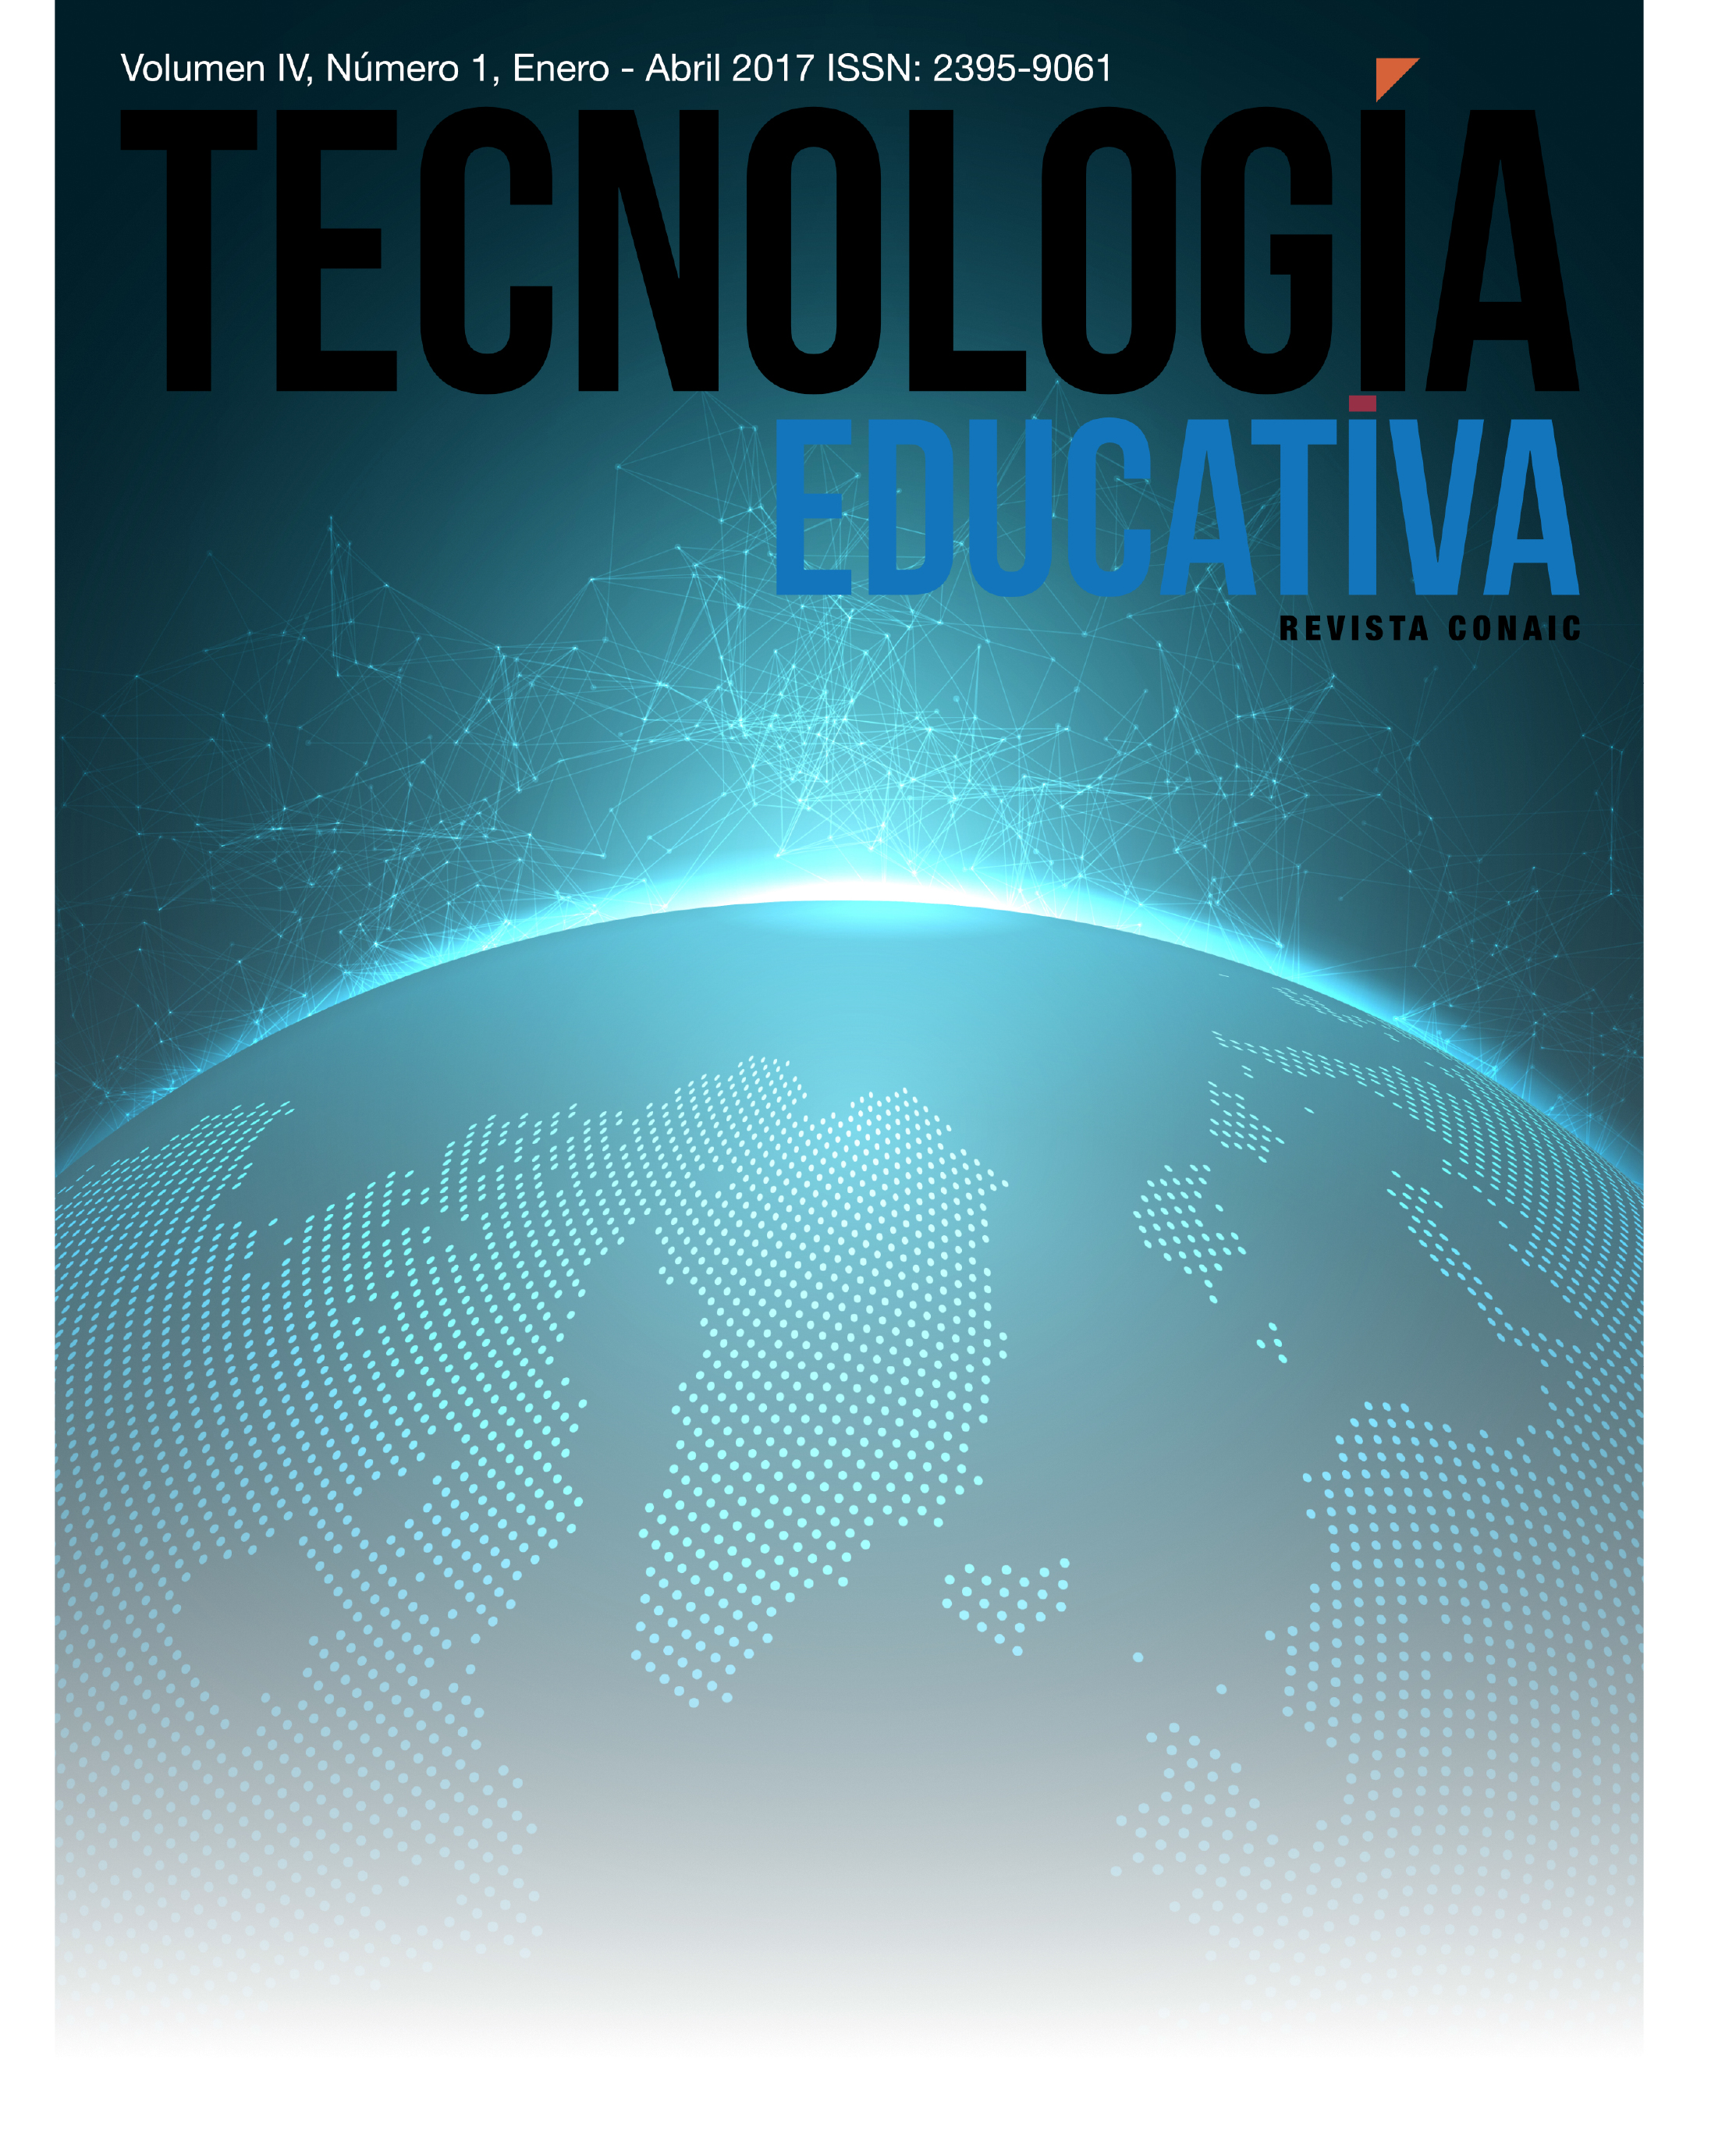 					Ver Vol. 4 Núm. 1 (2017): TECNOLOGÍA EDUCATIVA Vol. 4 Núm. 1, 2017
				